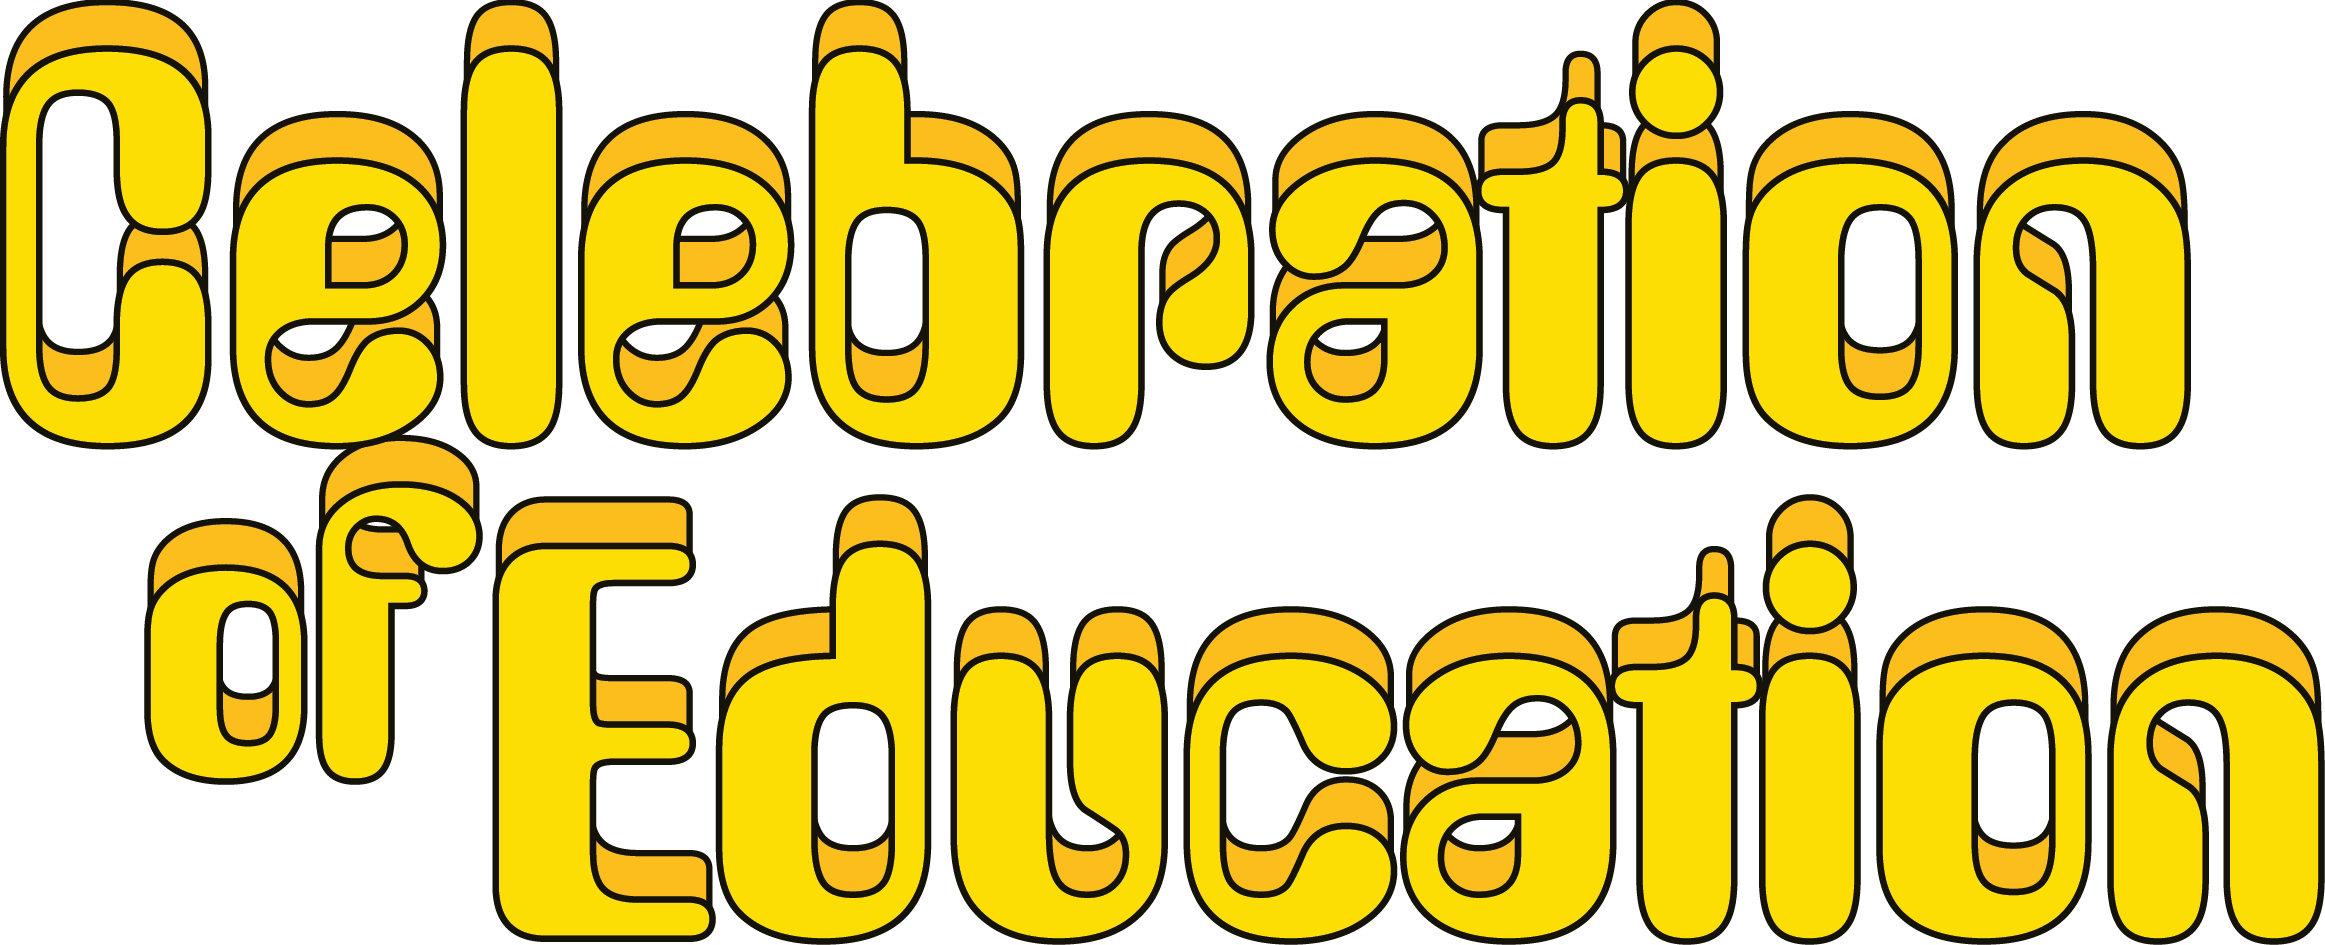 Title Card reading: "Celebration of Education" 